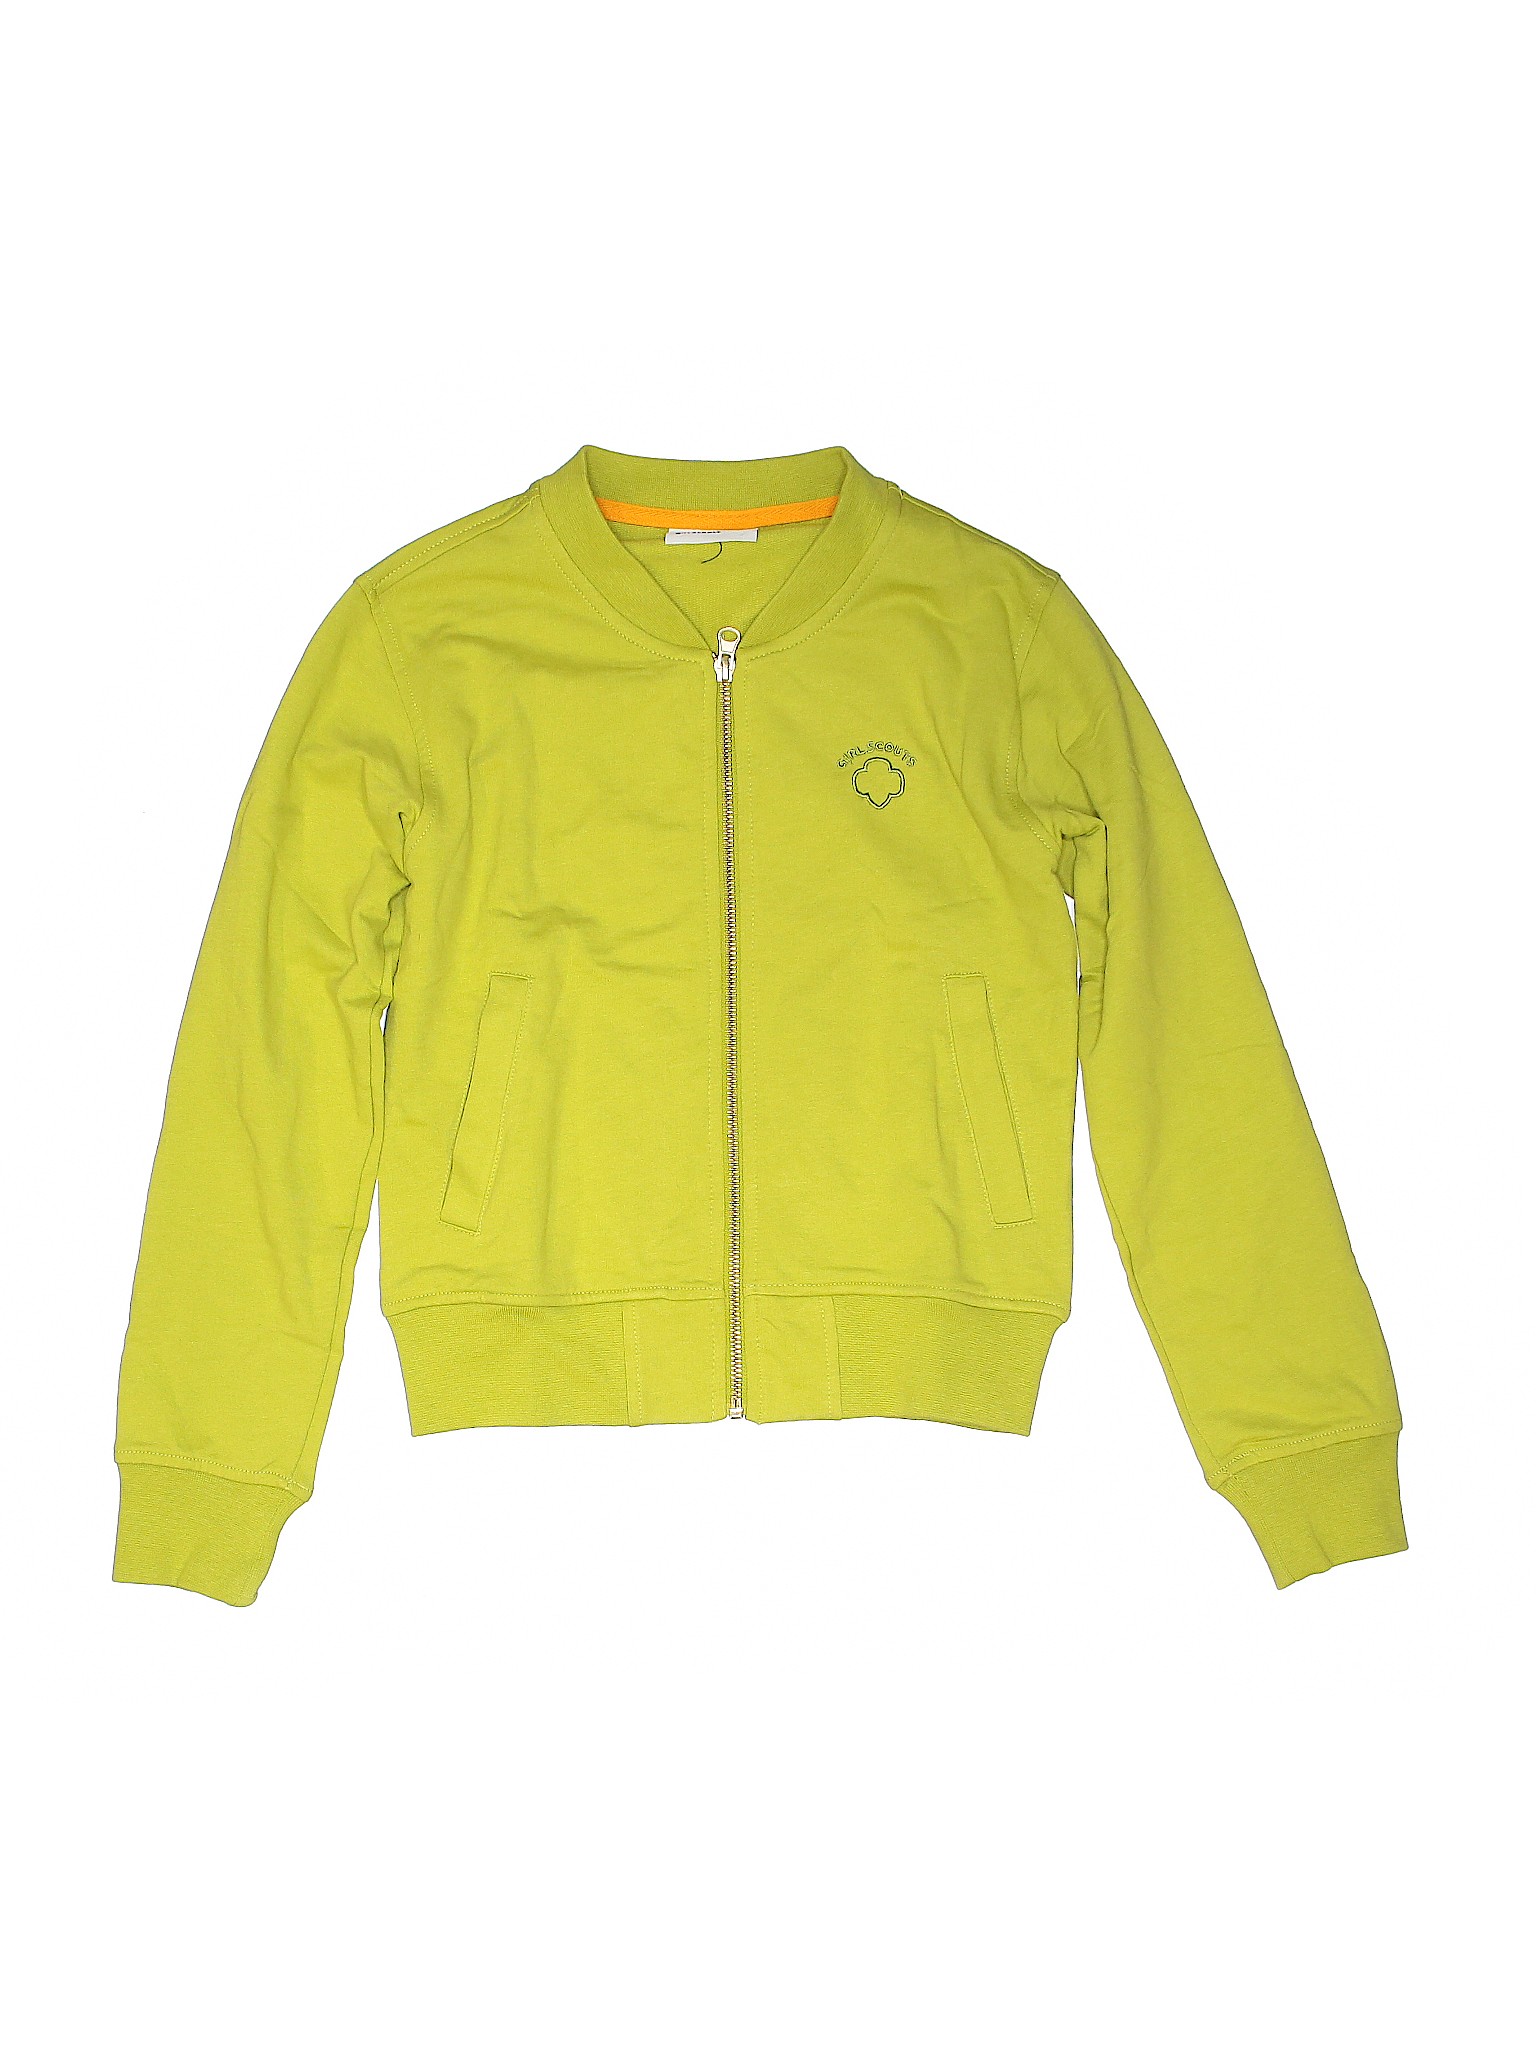 Assorted Brands Girls Yellow Jacket 7 | eBay